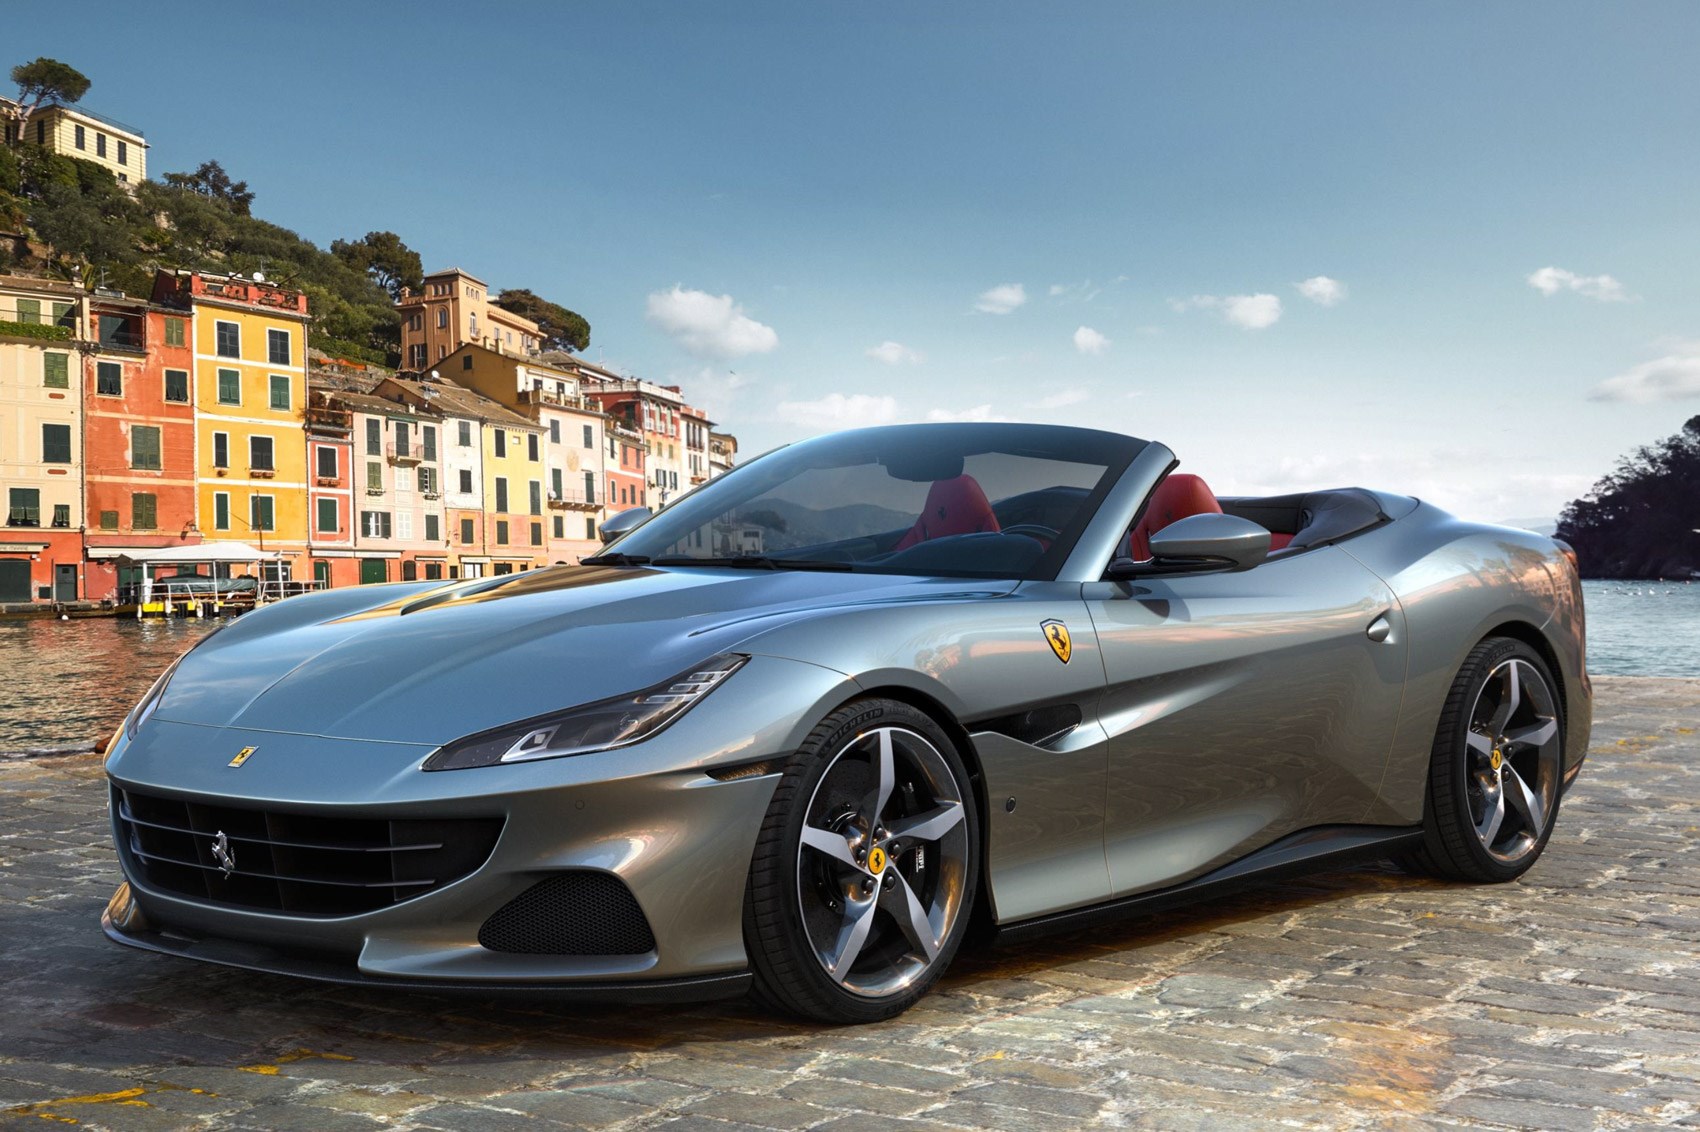 Ferrari Portofino M revealed: Entry-level convertible gains power boost